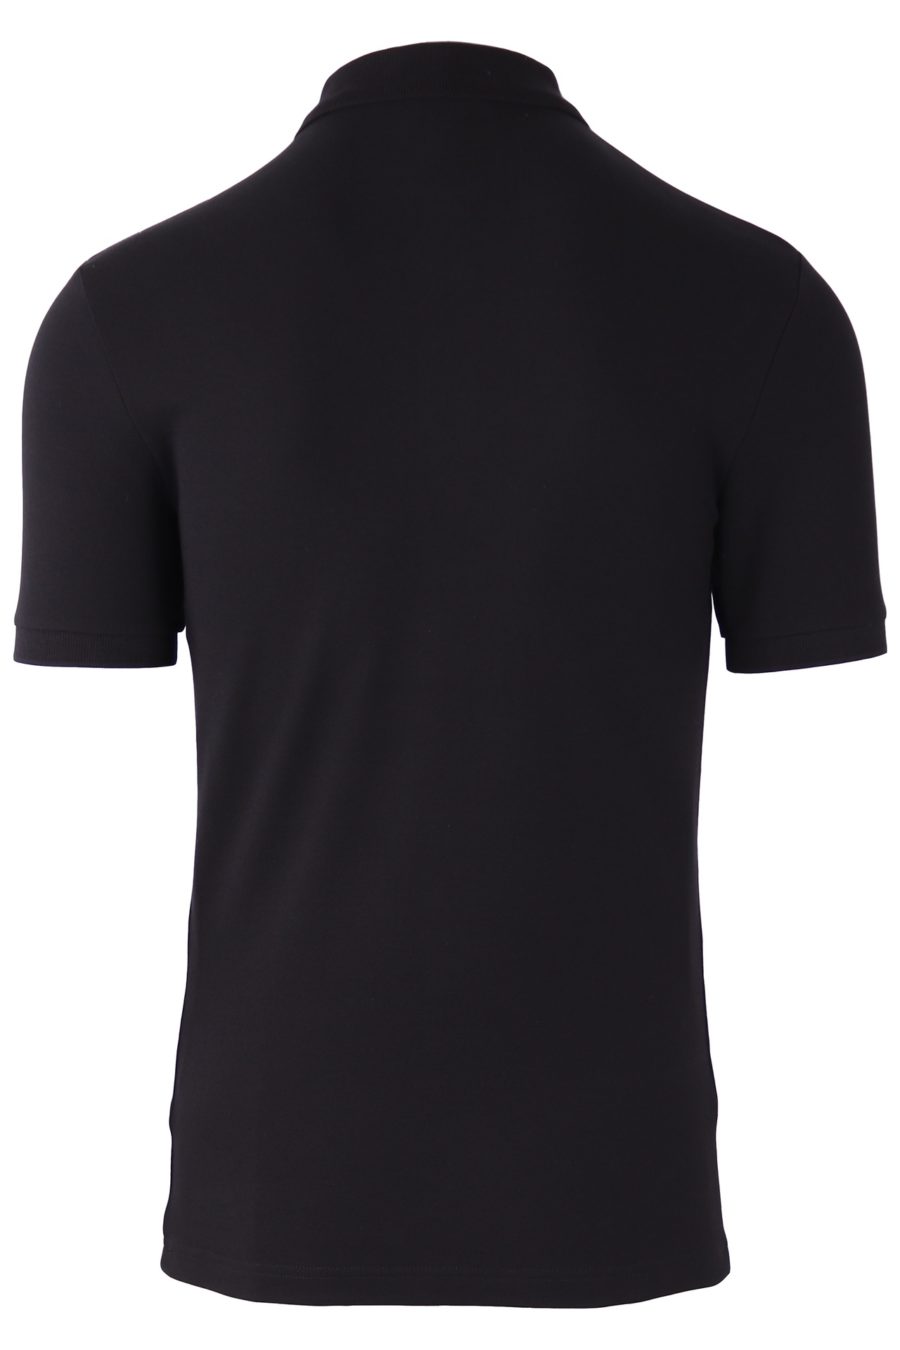 Unterwäsche-T-Shirt Balmain schwarz mit weißem Logo - 6ce33c6e13bb416bd67925505ffdd82219817b8e 1